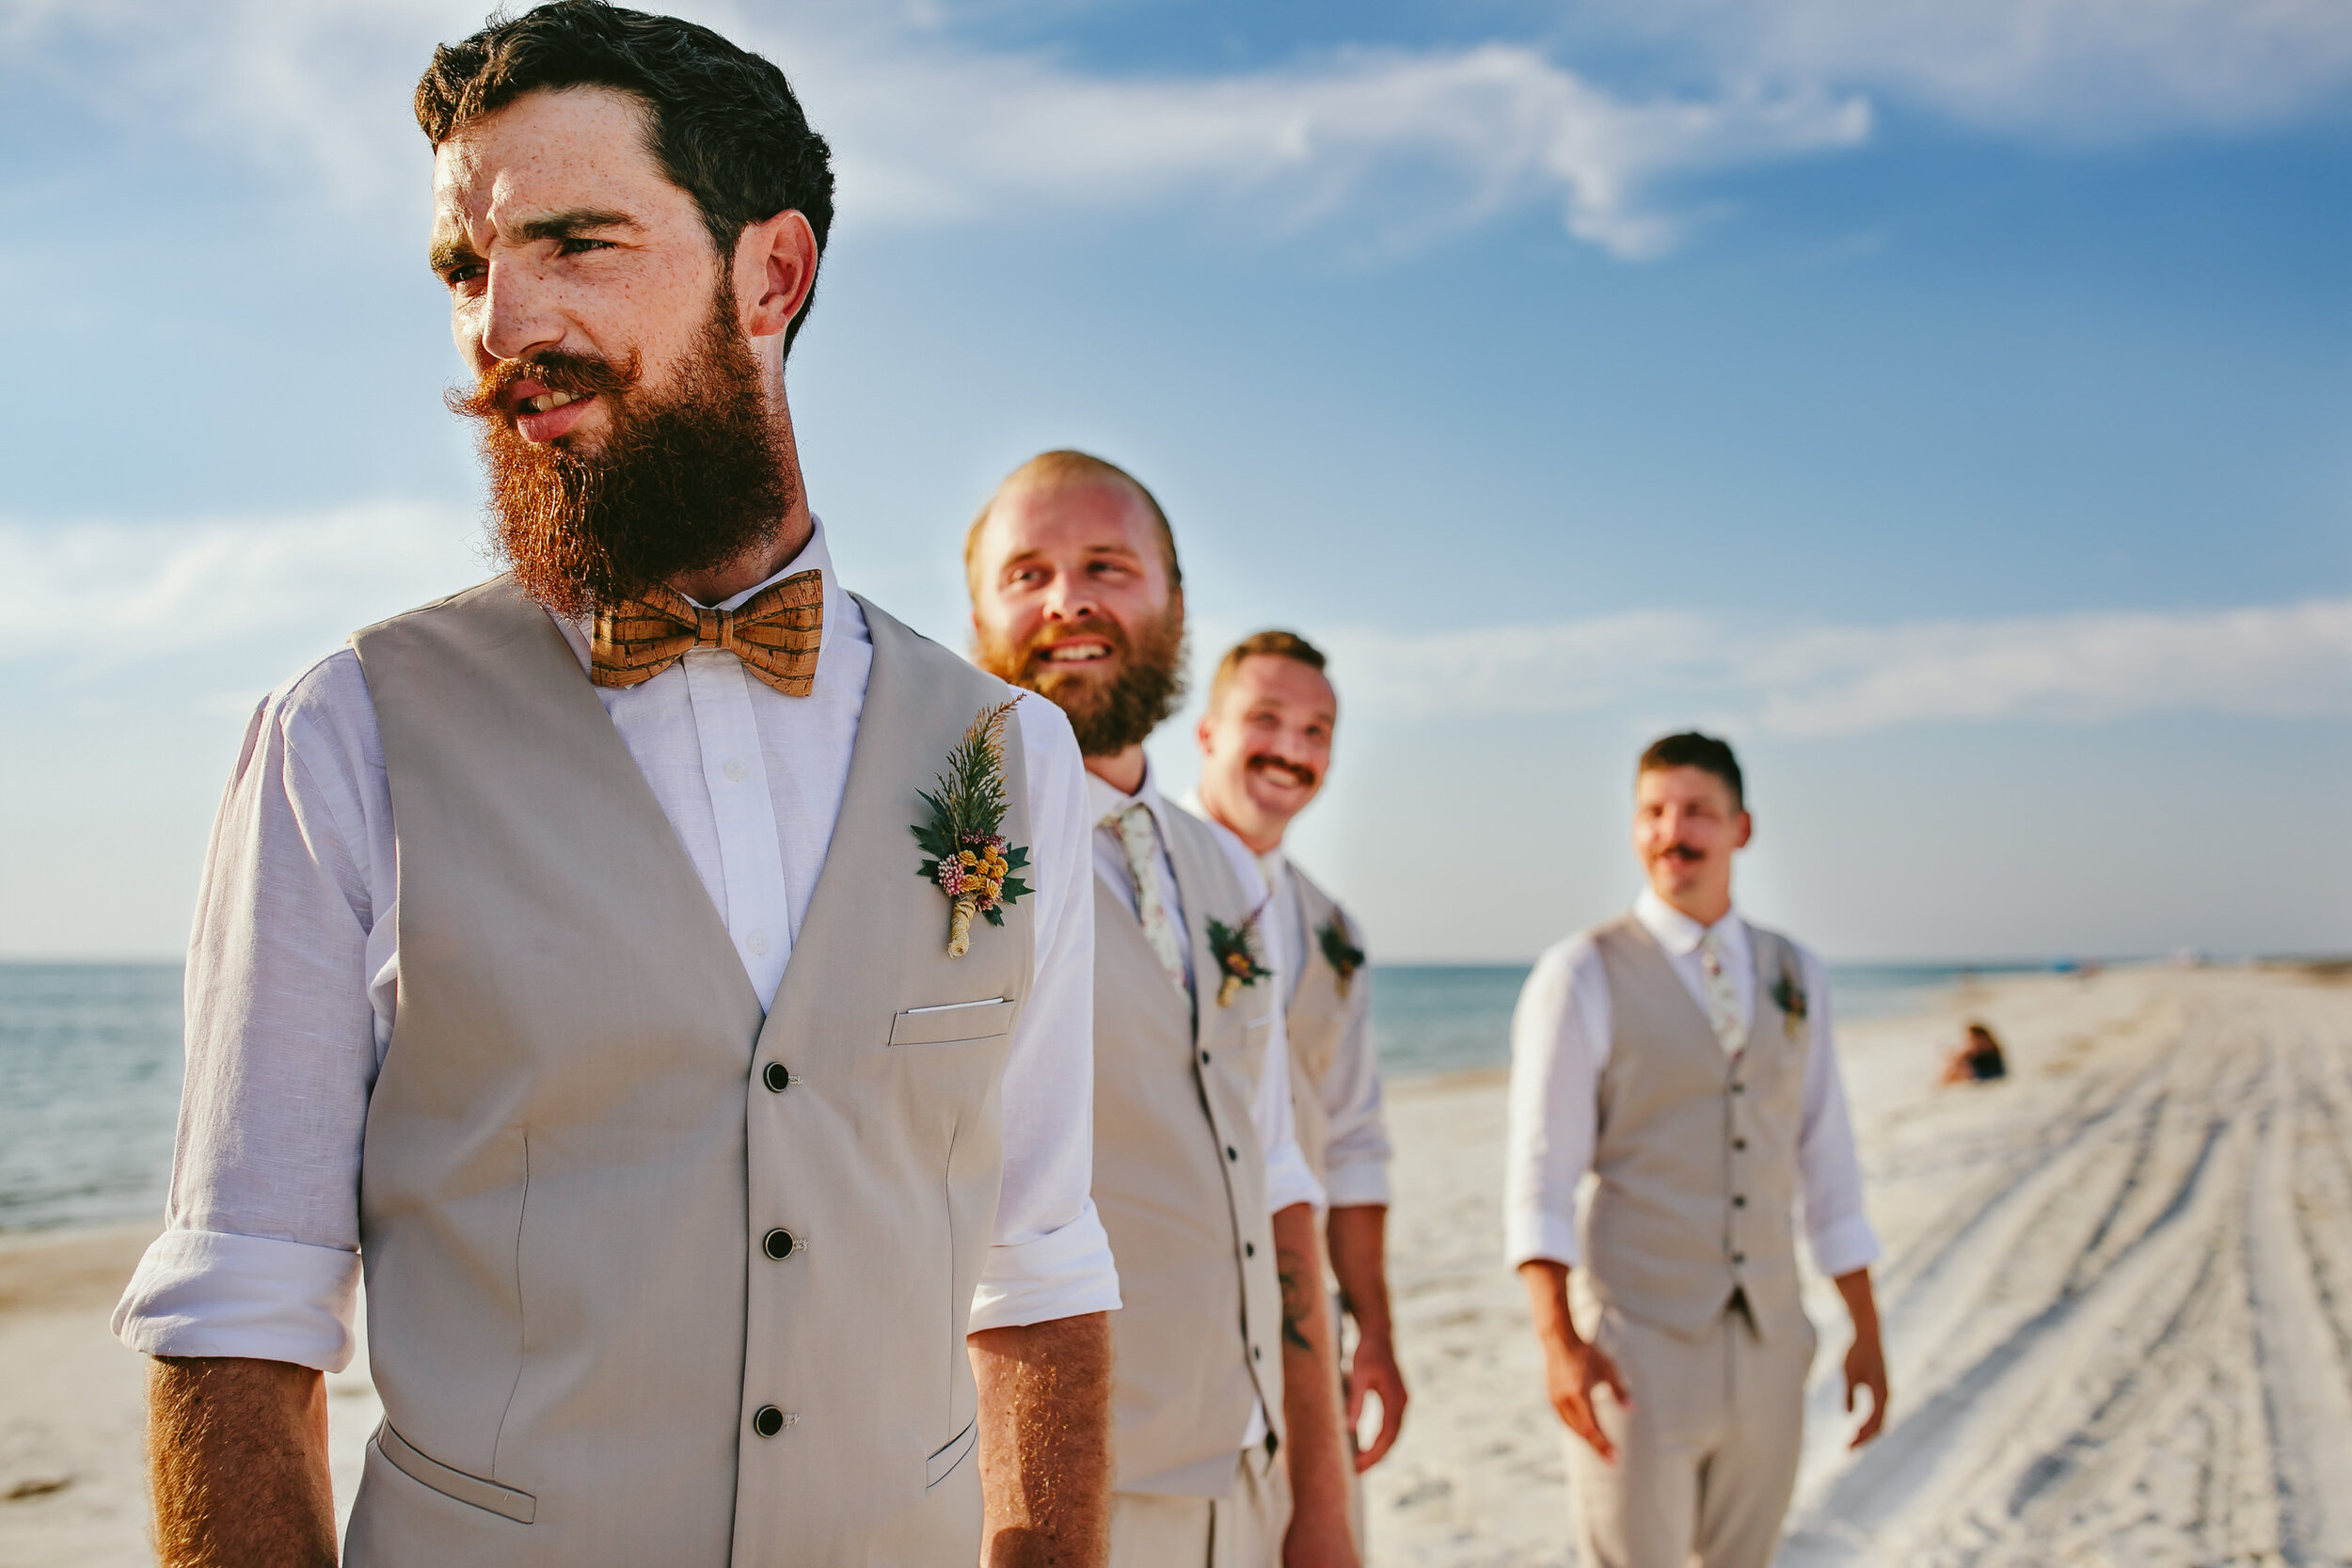 Groom-Groomsman-Beach-Wedding-Ceremony-Port-St-Joe